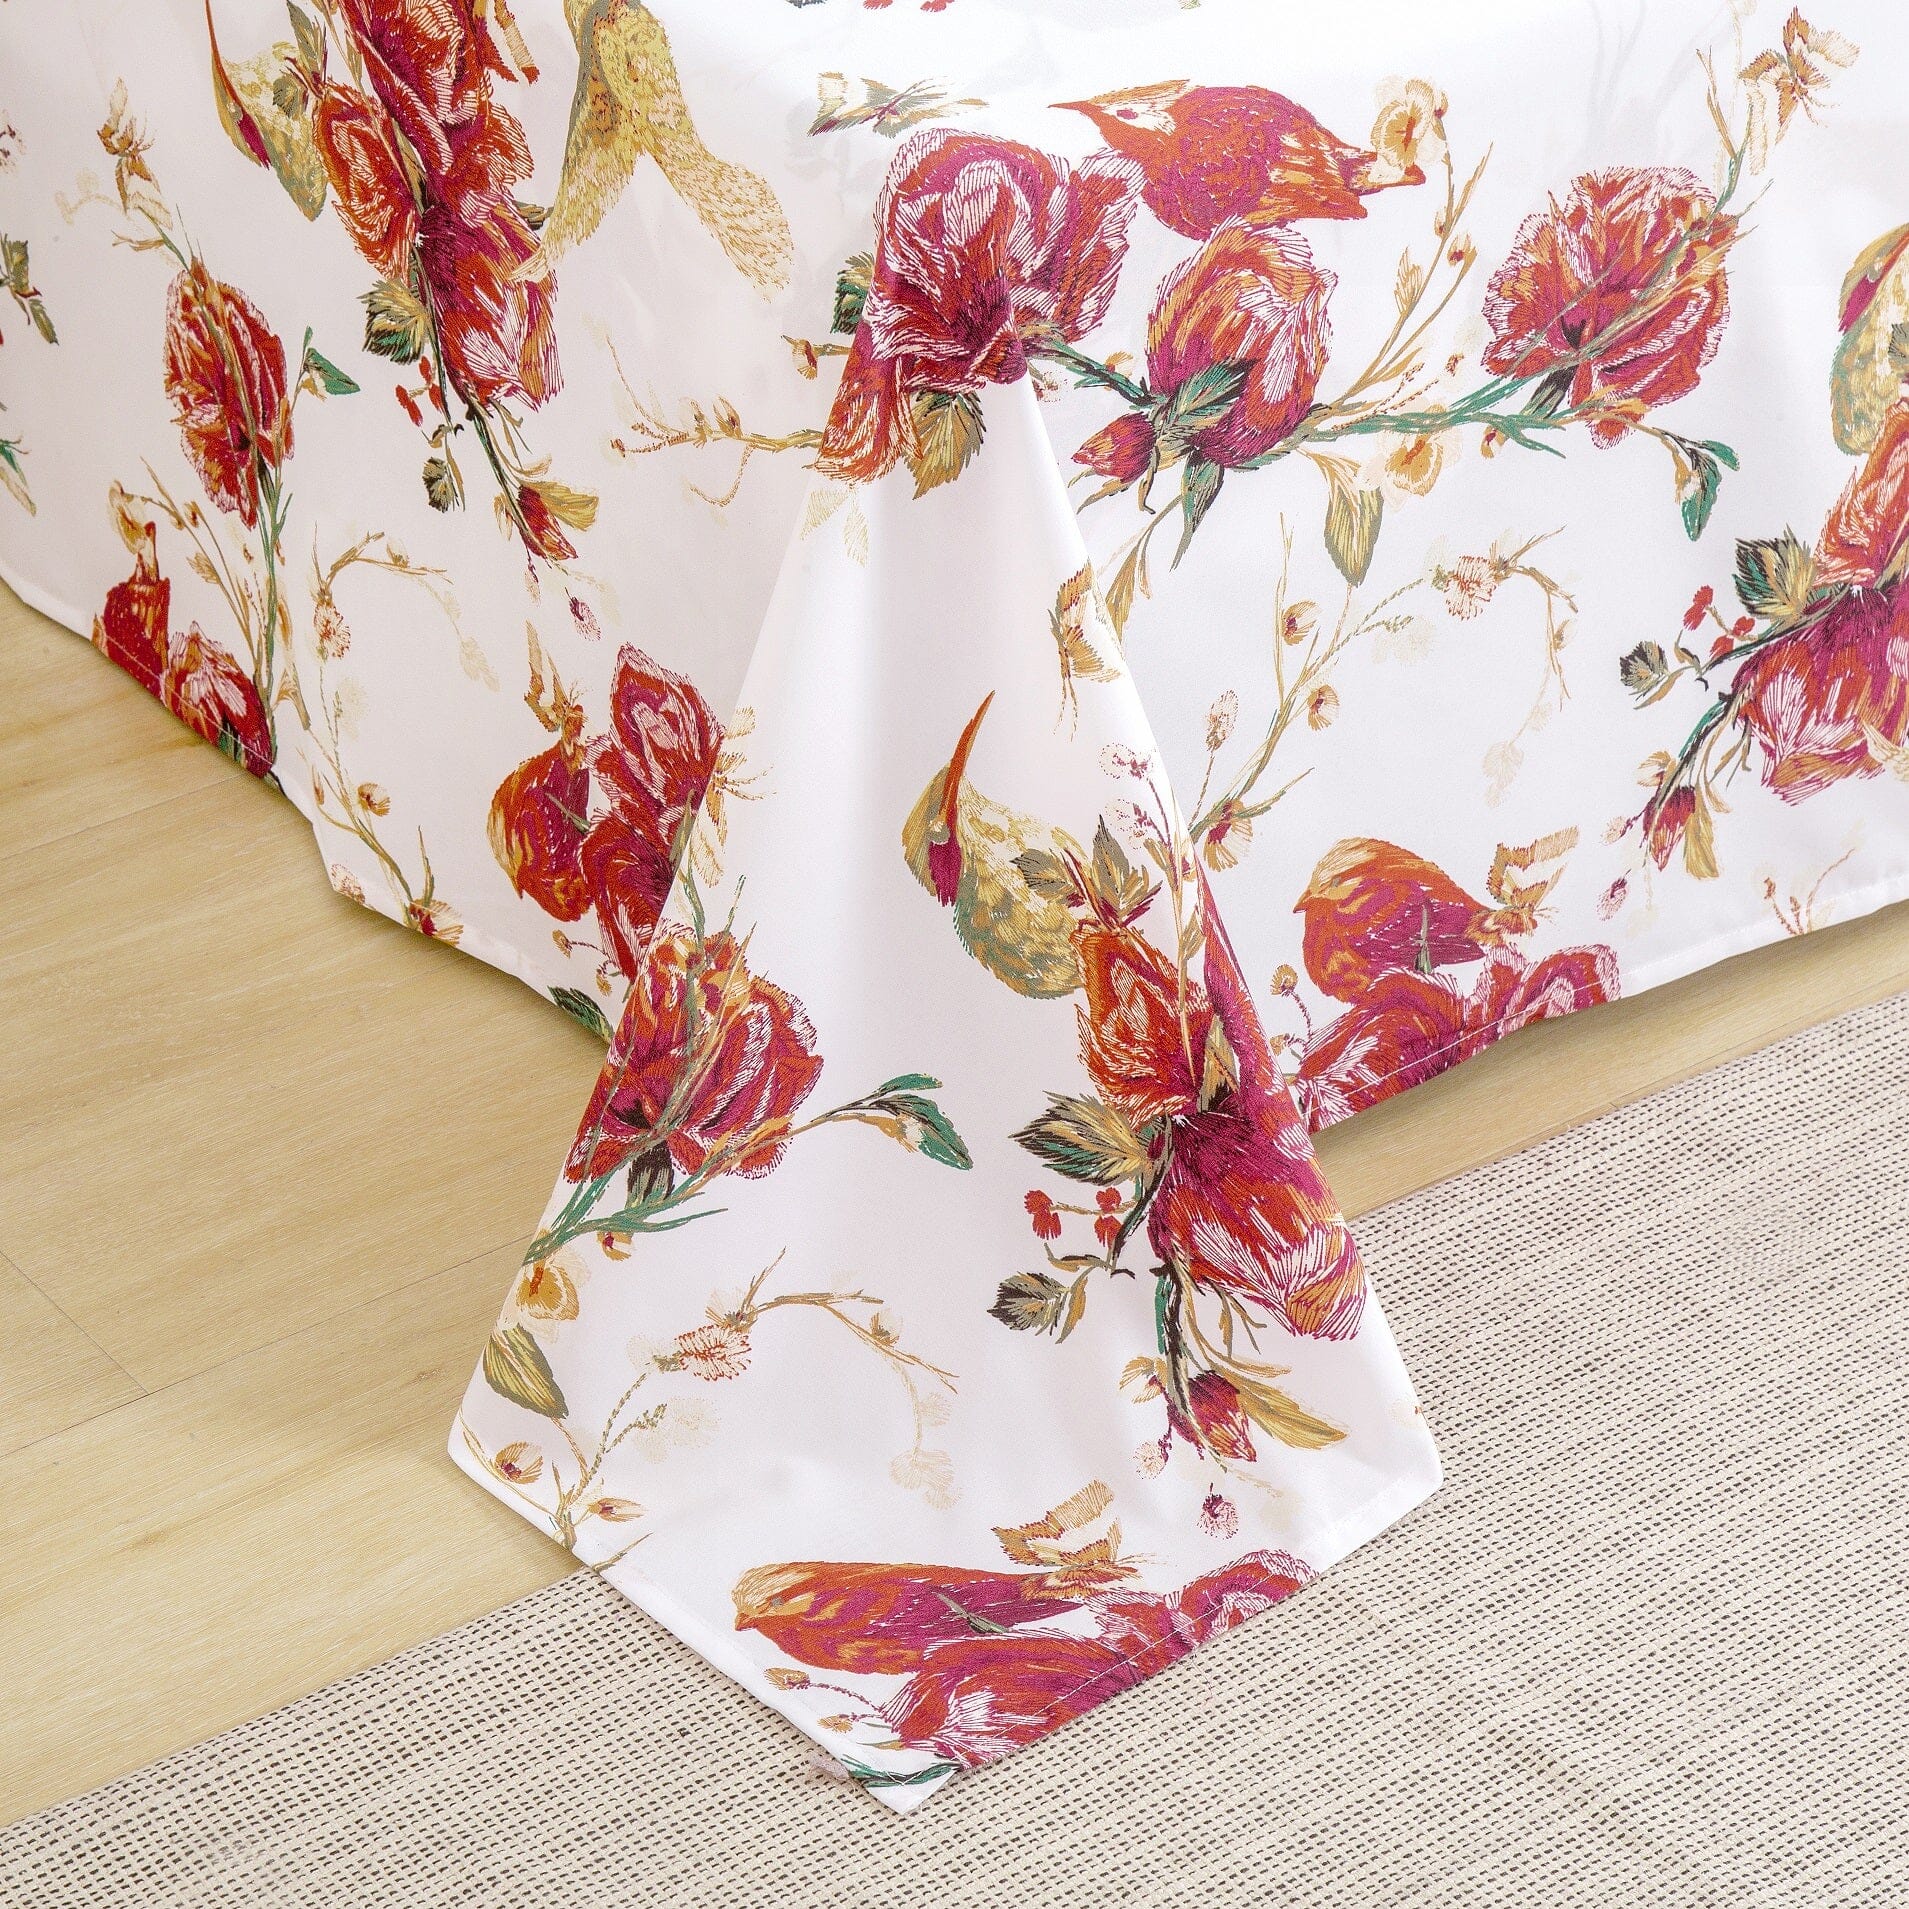 Tache Floral Hummingbirds Burgundy White Vintage Rose Garden Bed Sheet Set (SD-7676) - Tache Home Fashion